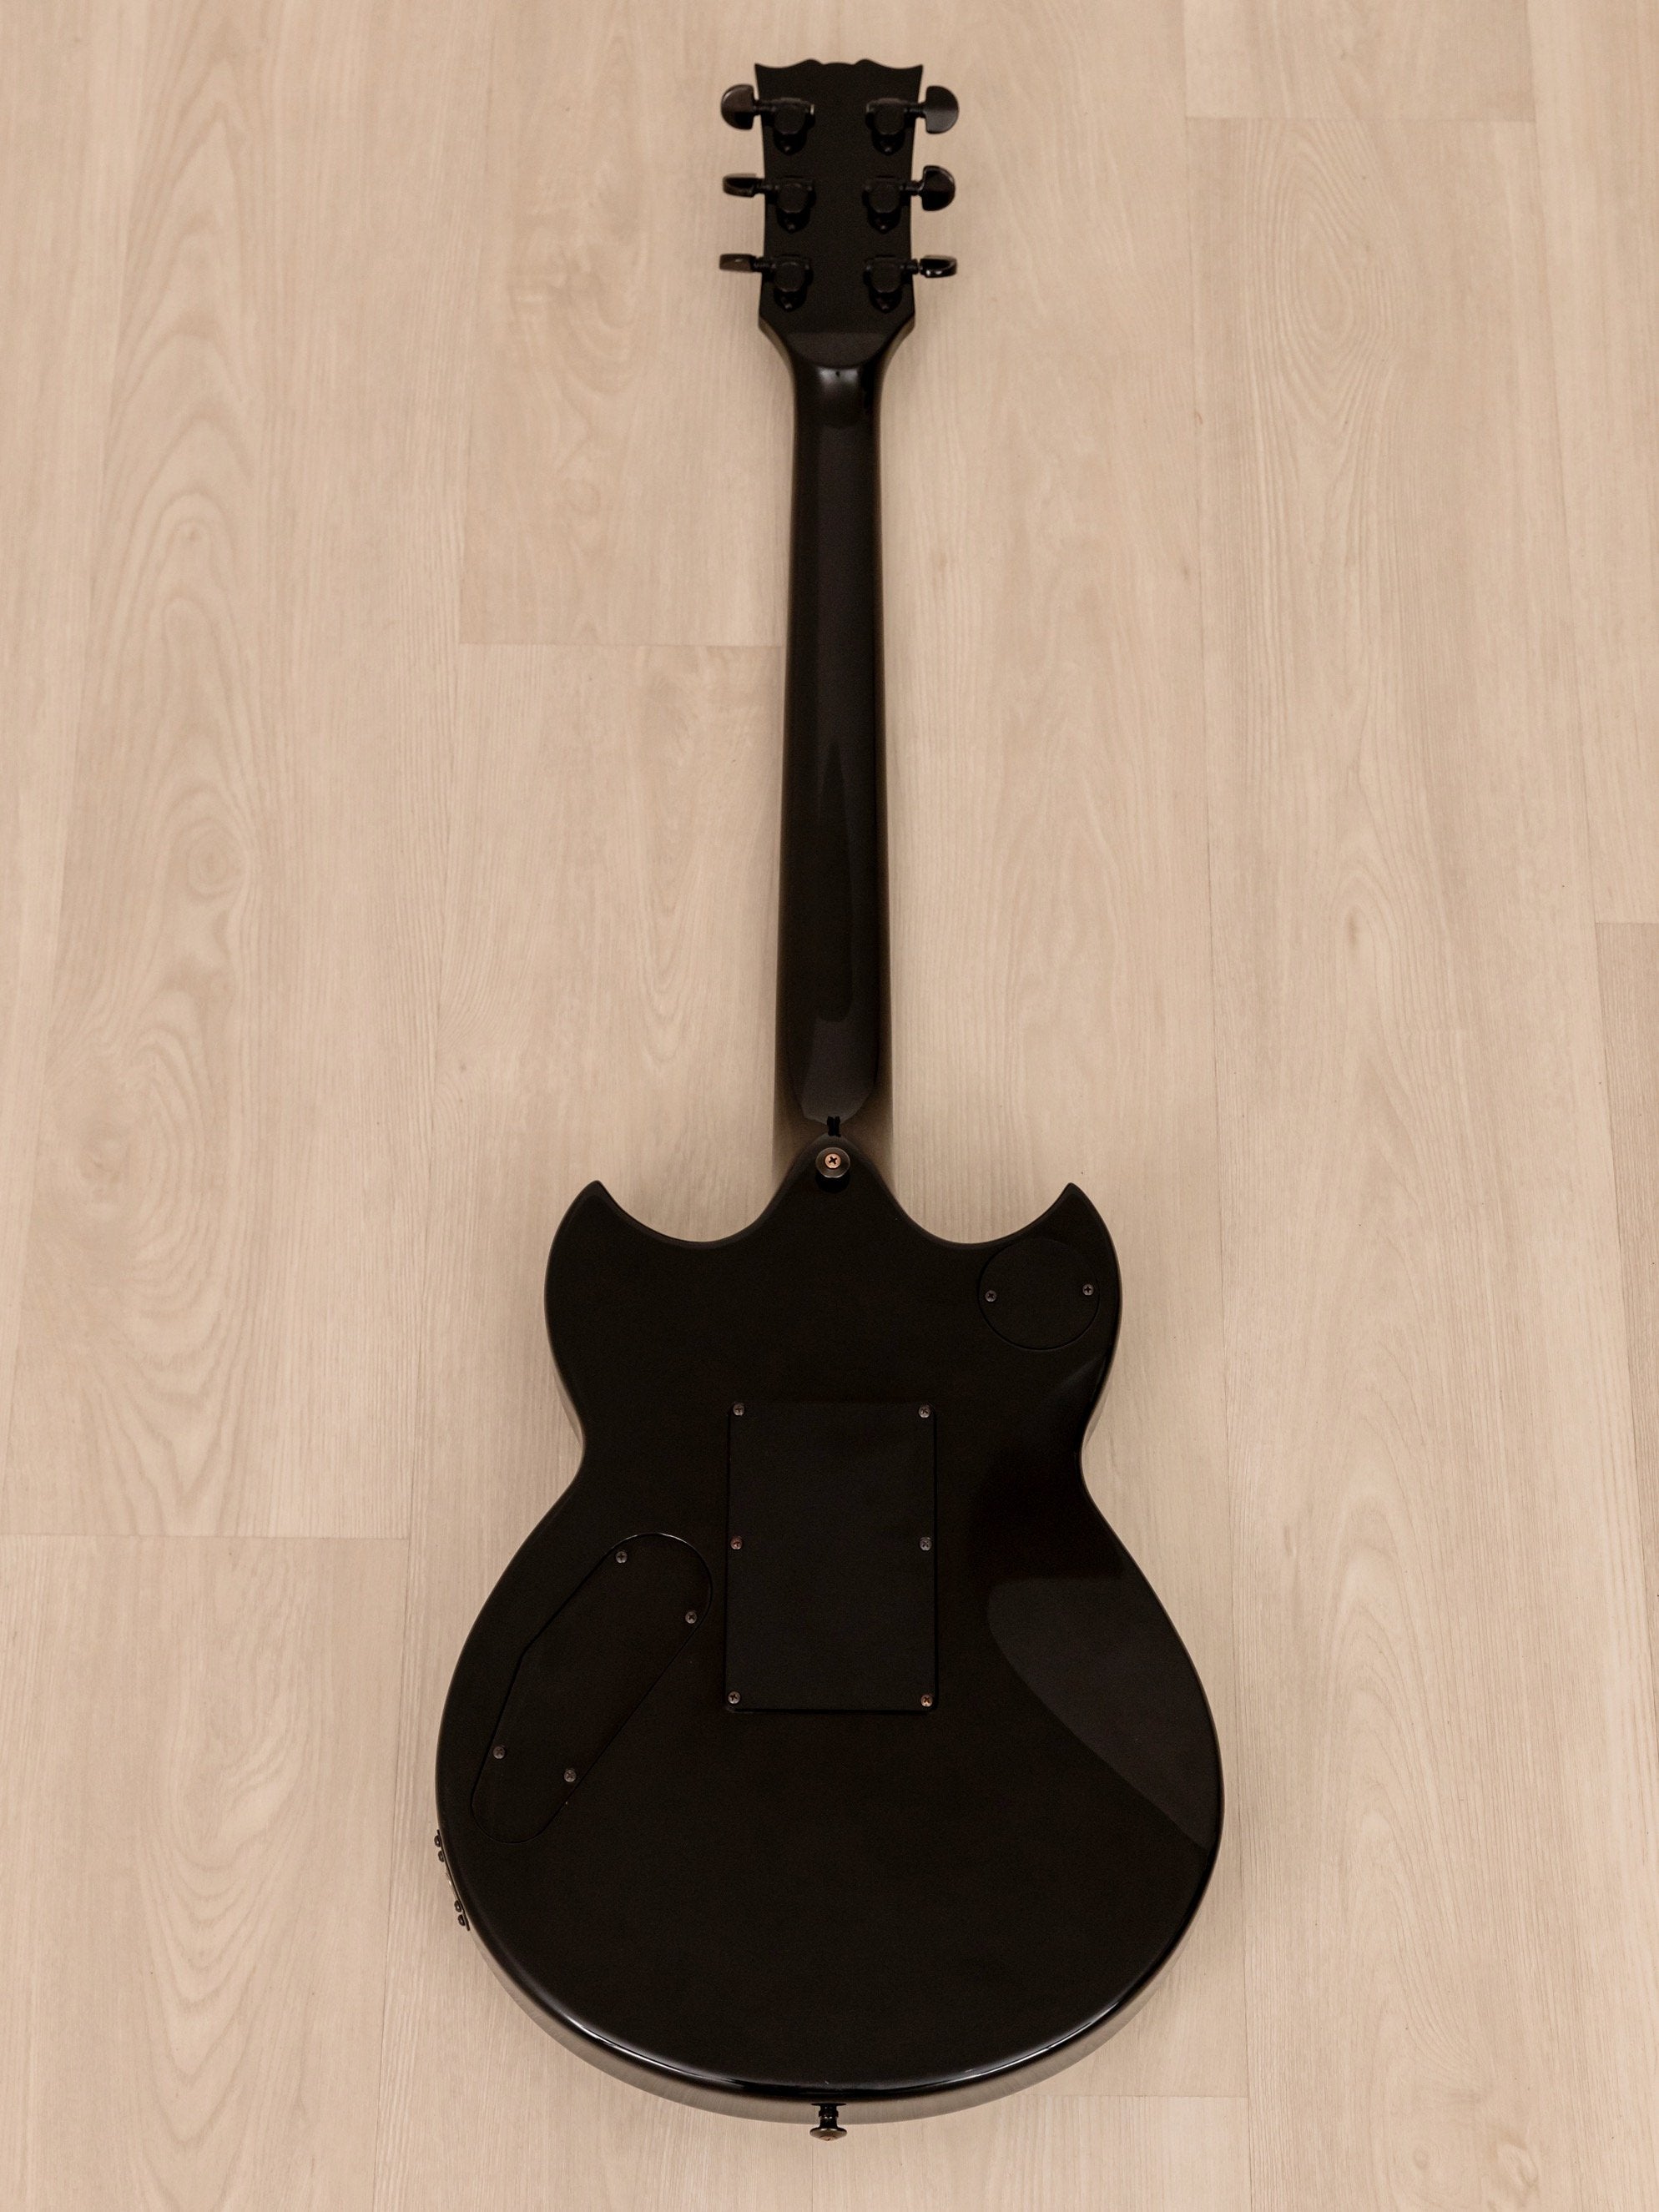 1984 Yamaha SG1300TS Vintage Electric Guitar Black w/ Tremolo & Spinex, Japan